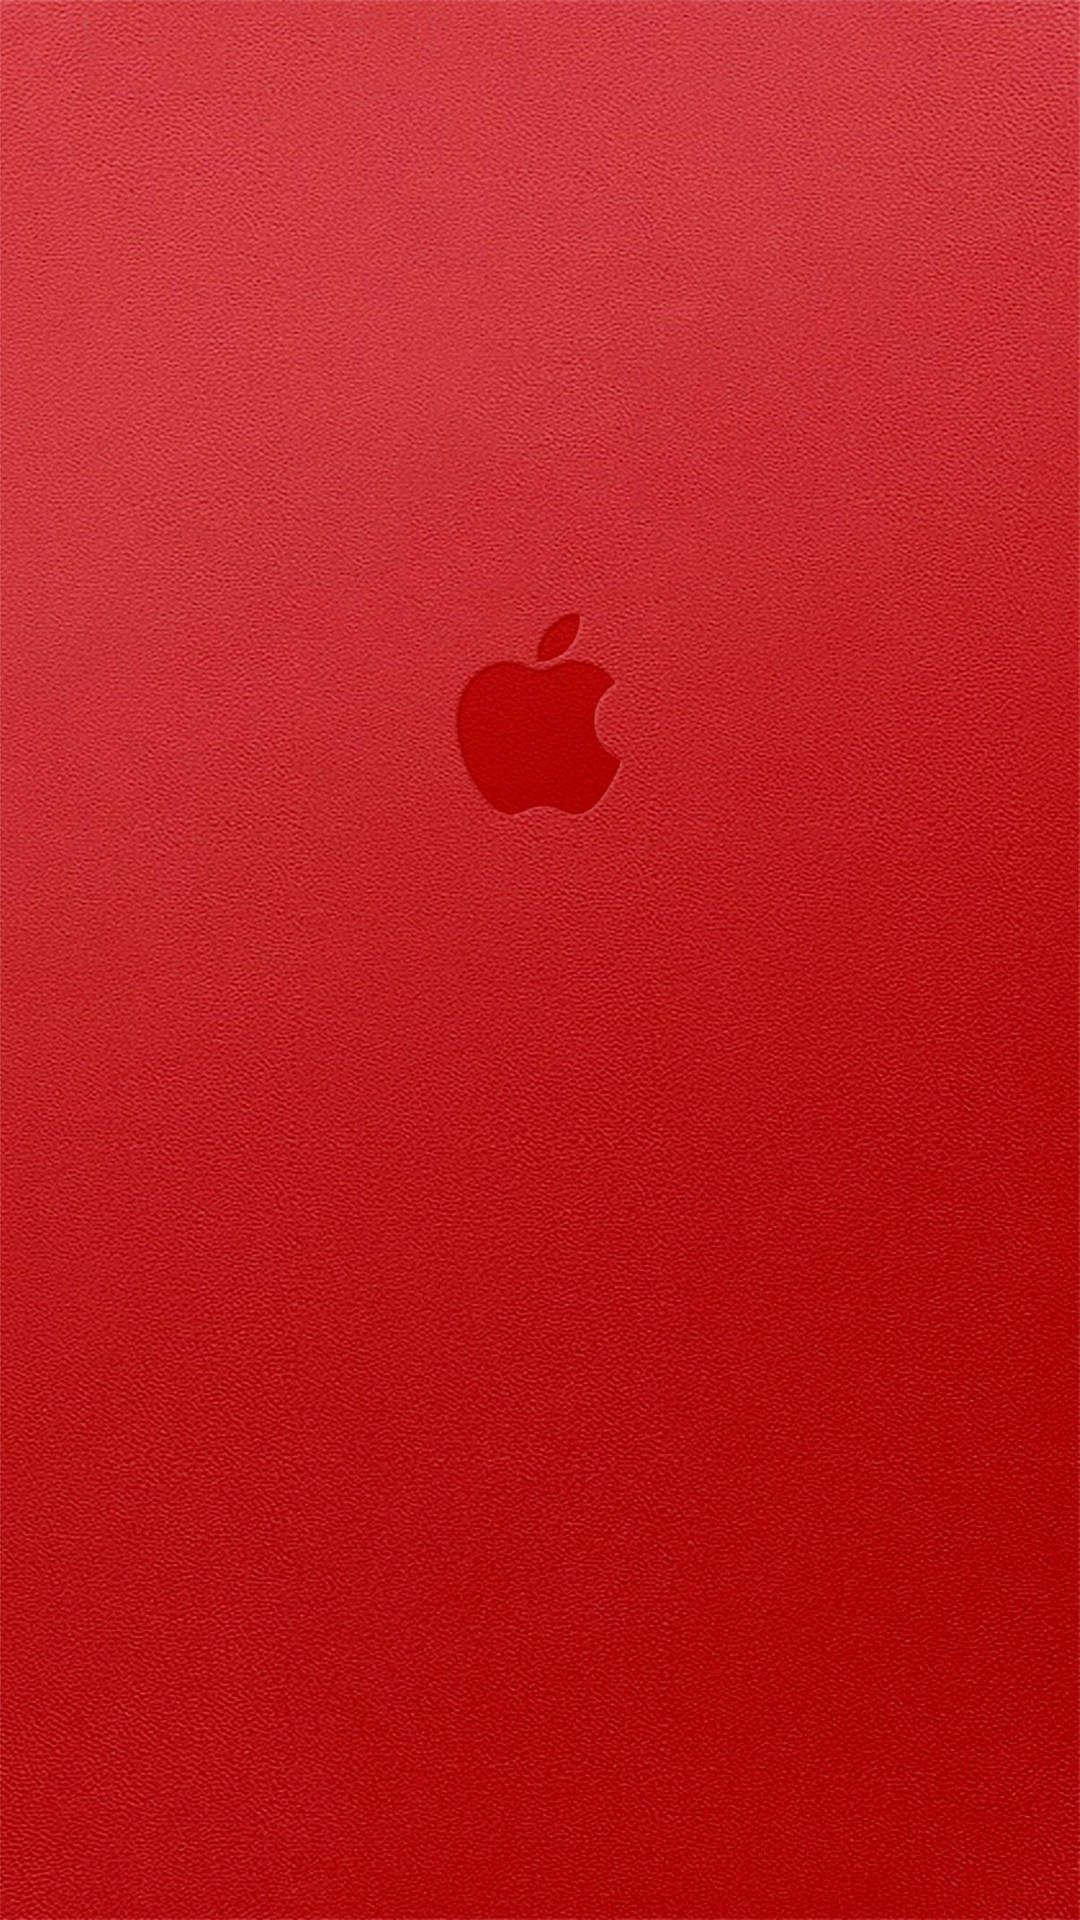 iPhone X Original Apple Logo On Red Wallpaper